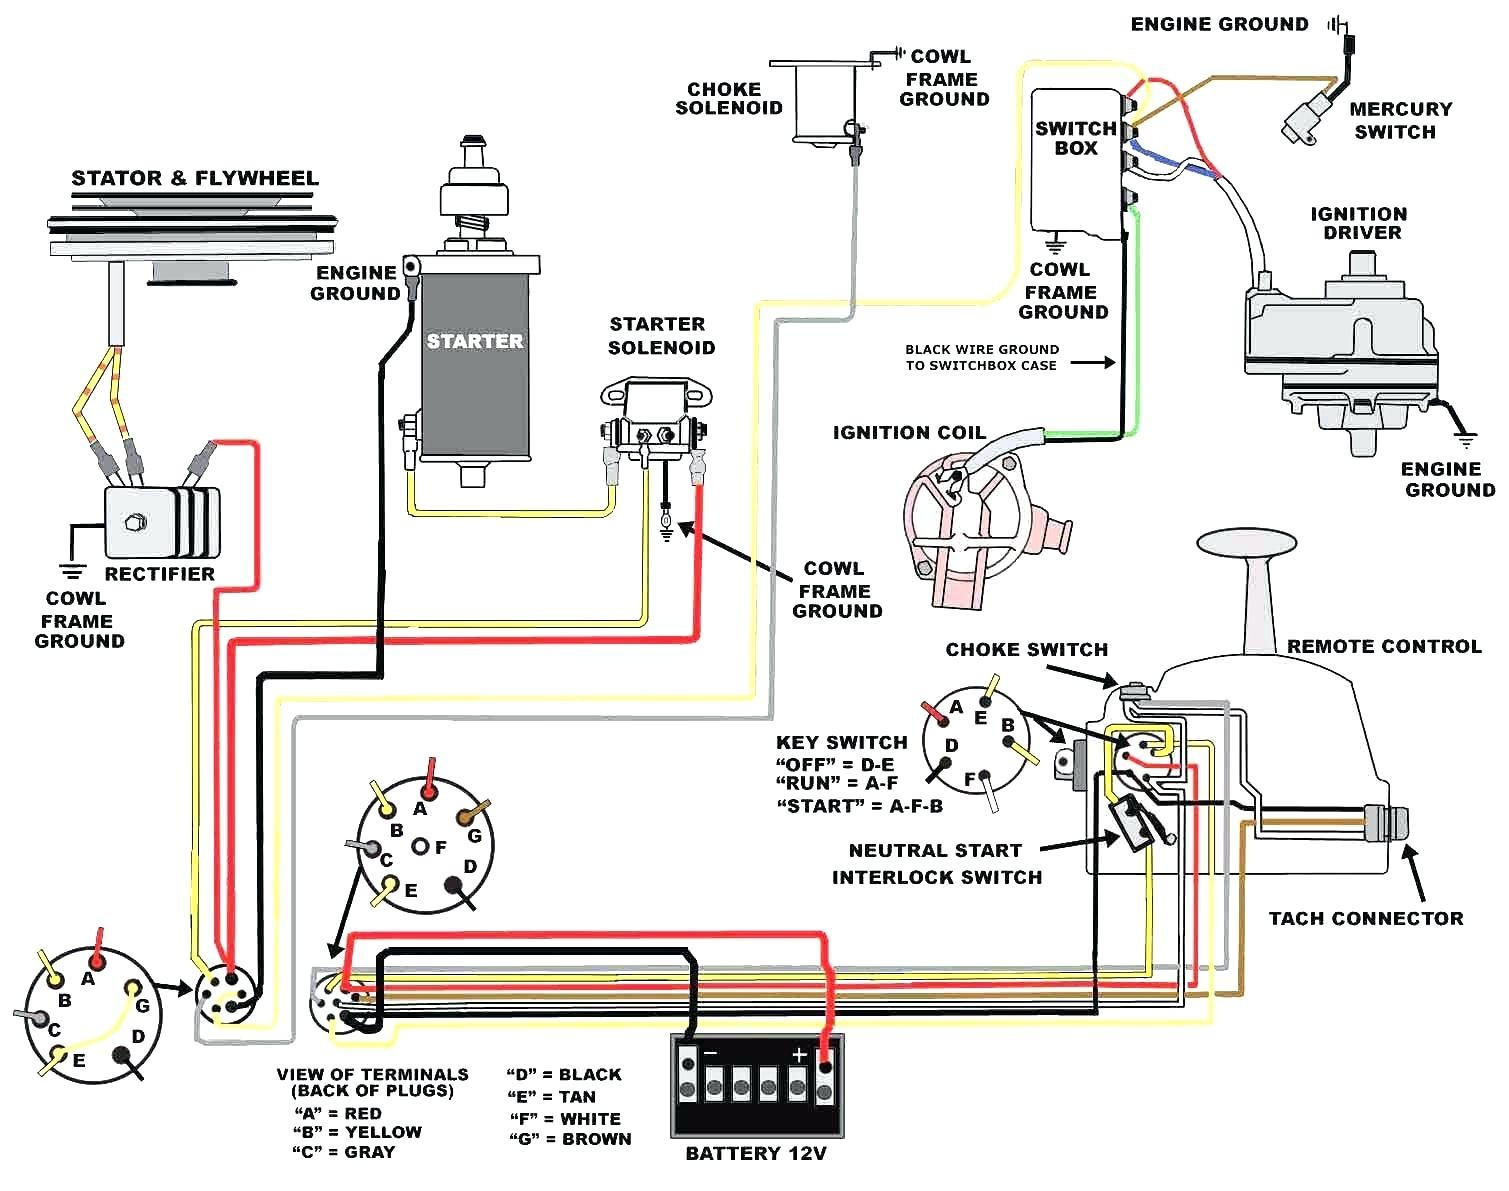 Random Ignition Switch Wiring Diagram - Panoramabypatysesma - Ignition Switch Wiring Diagram